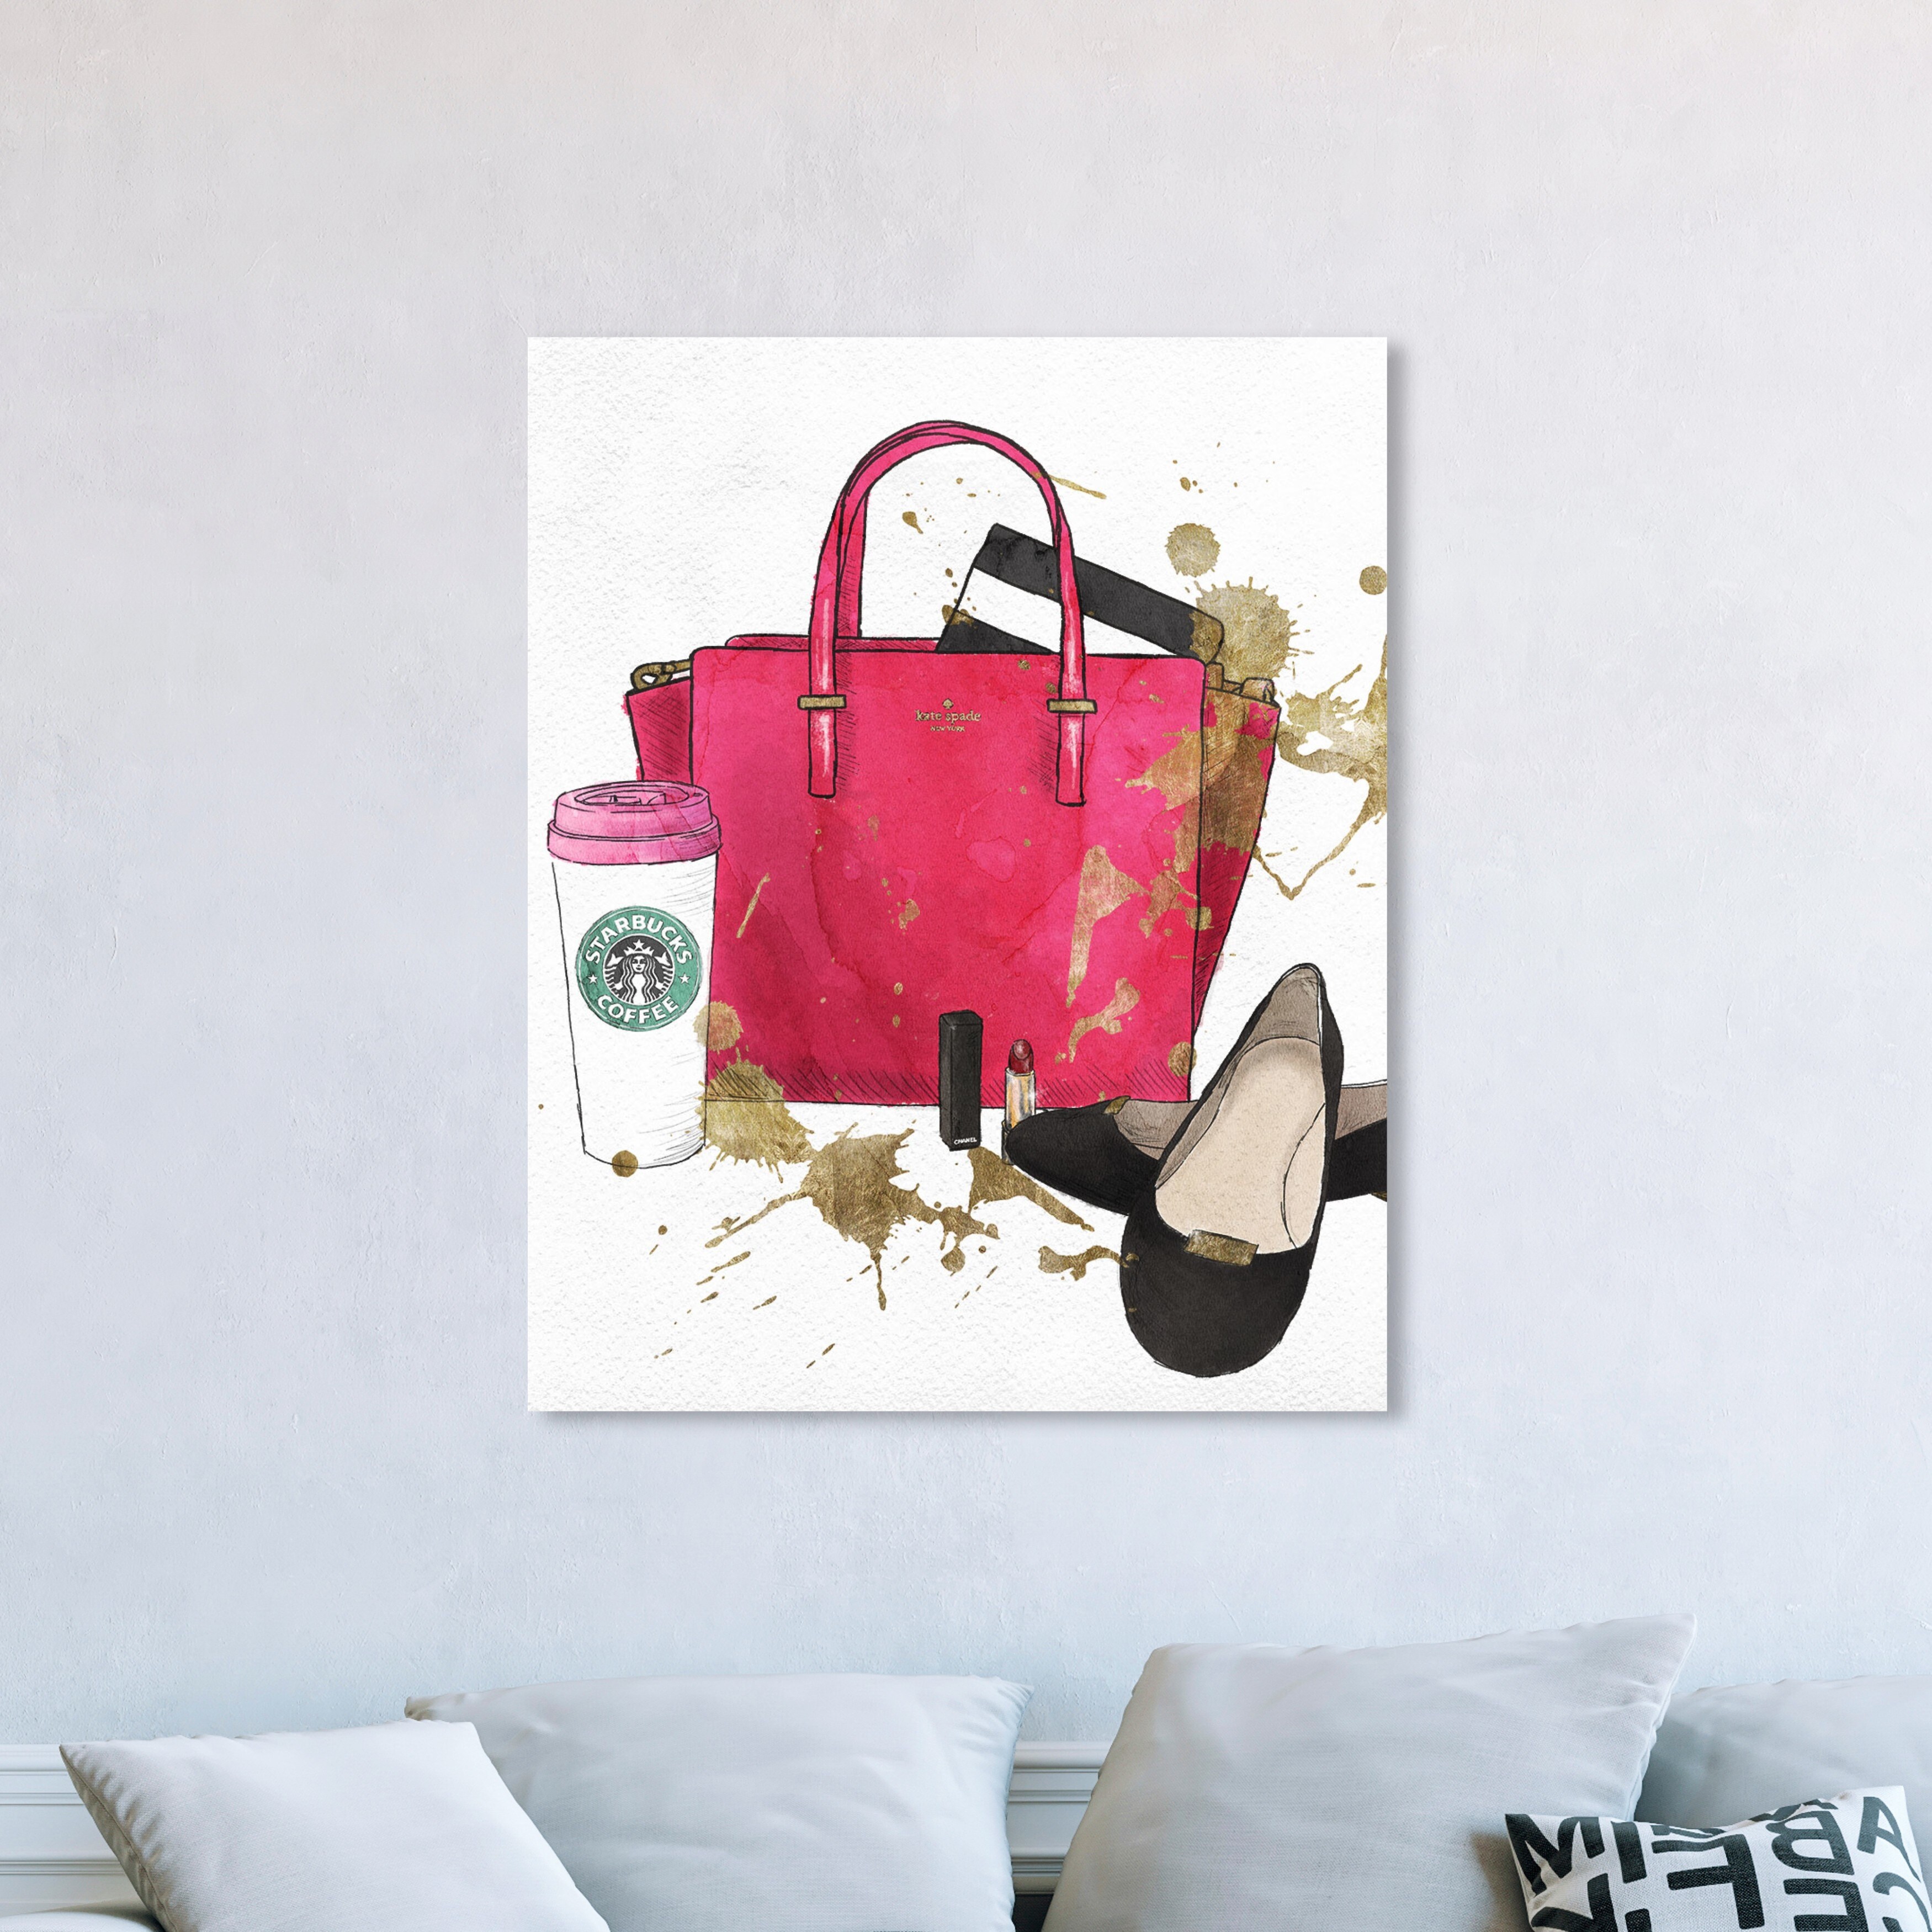 Chanel Handbag Starbucks Cup Fashion Wall Art Print